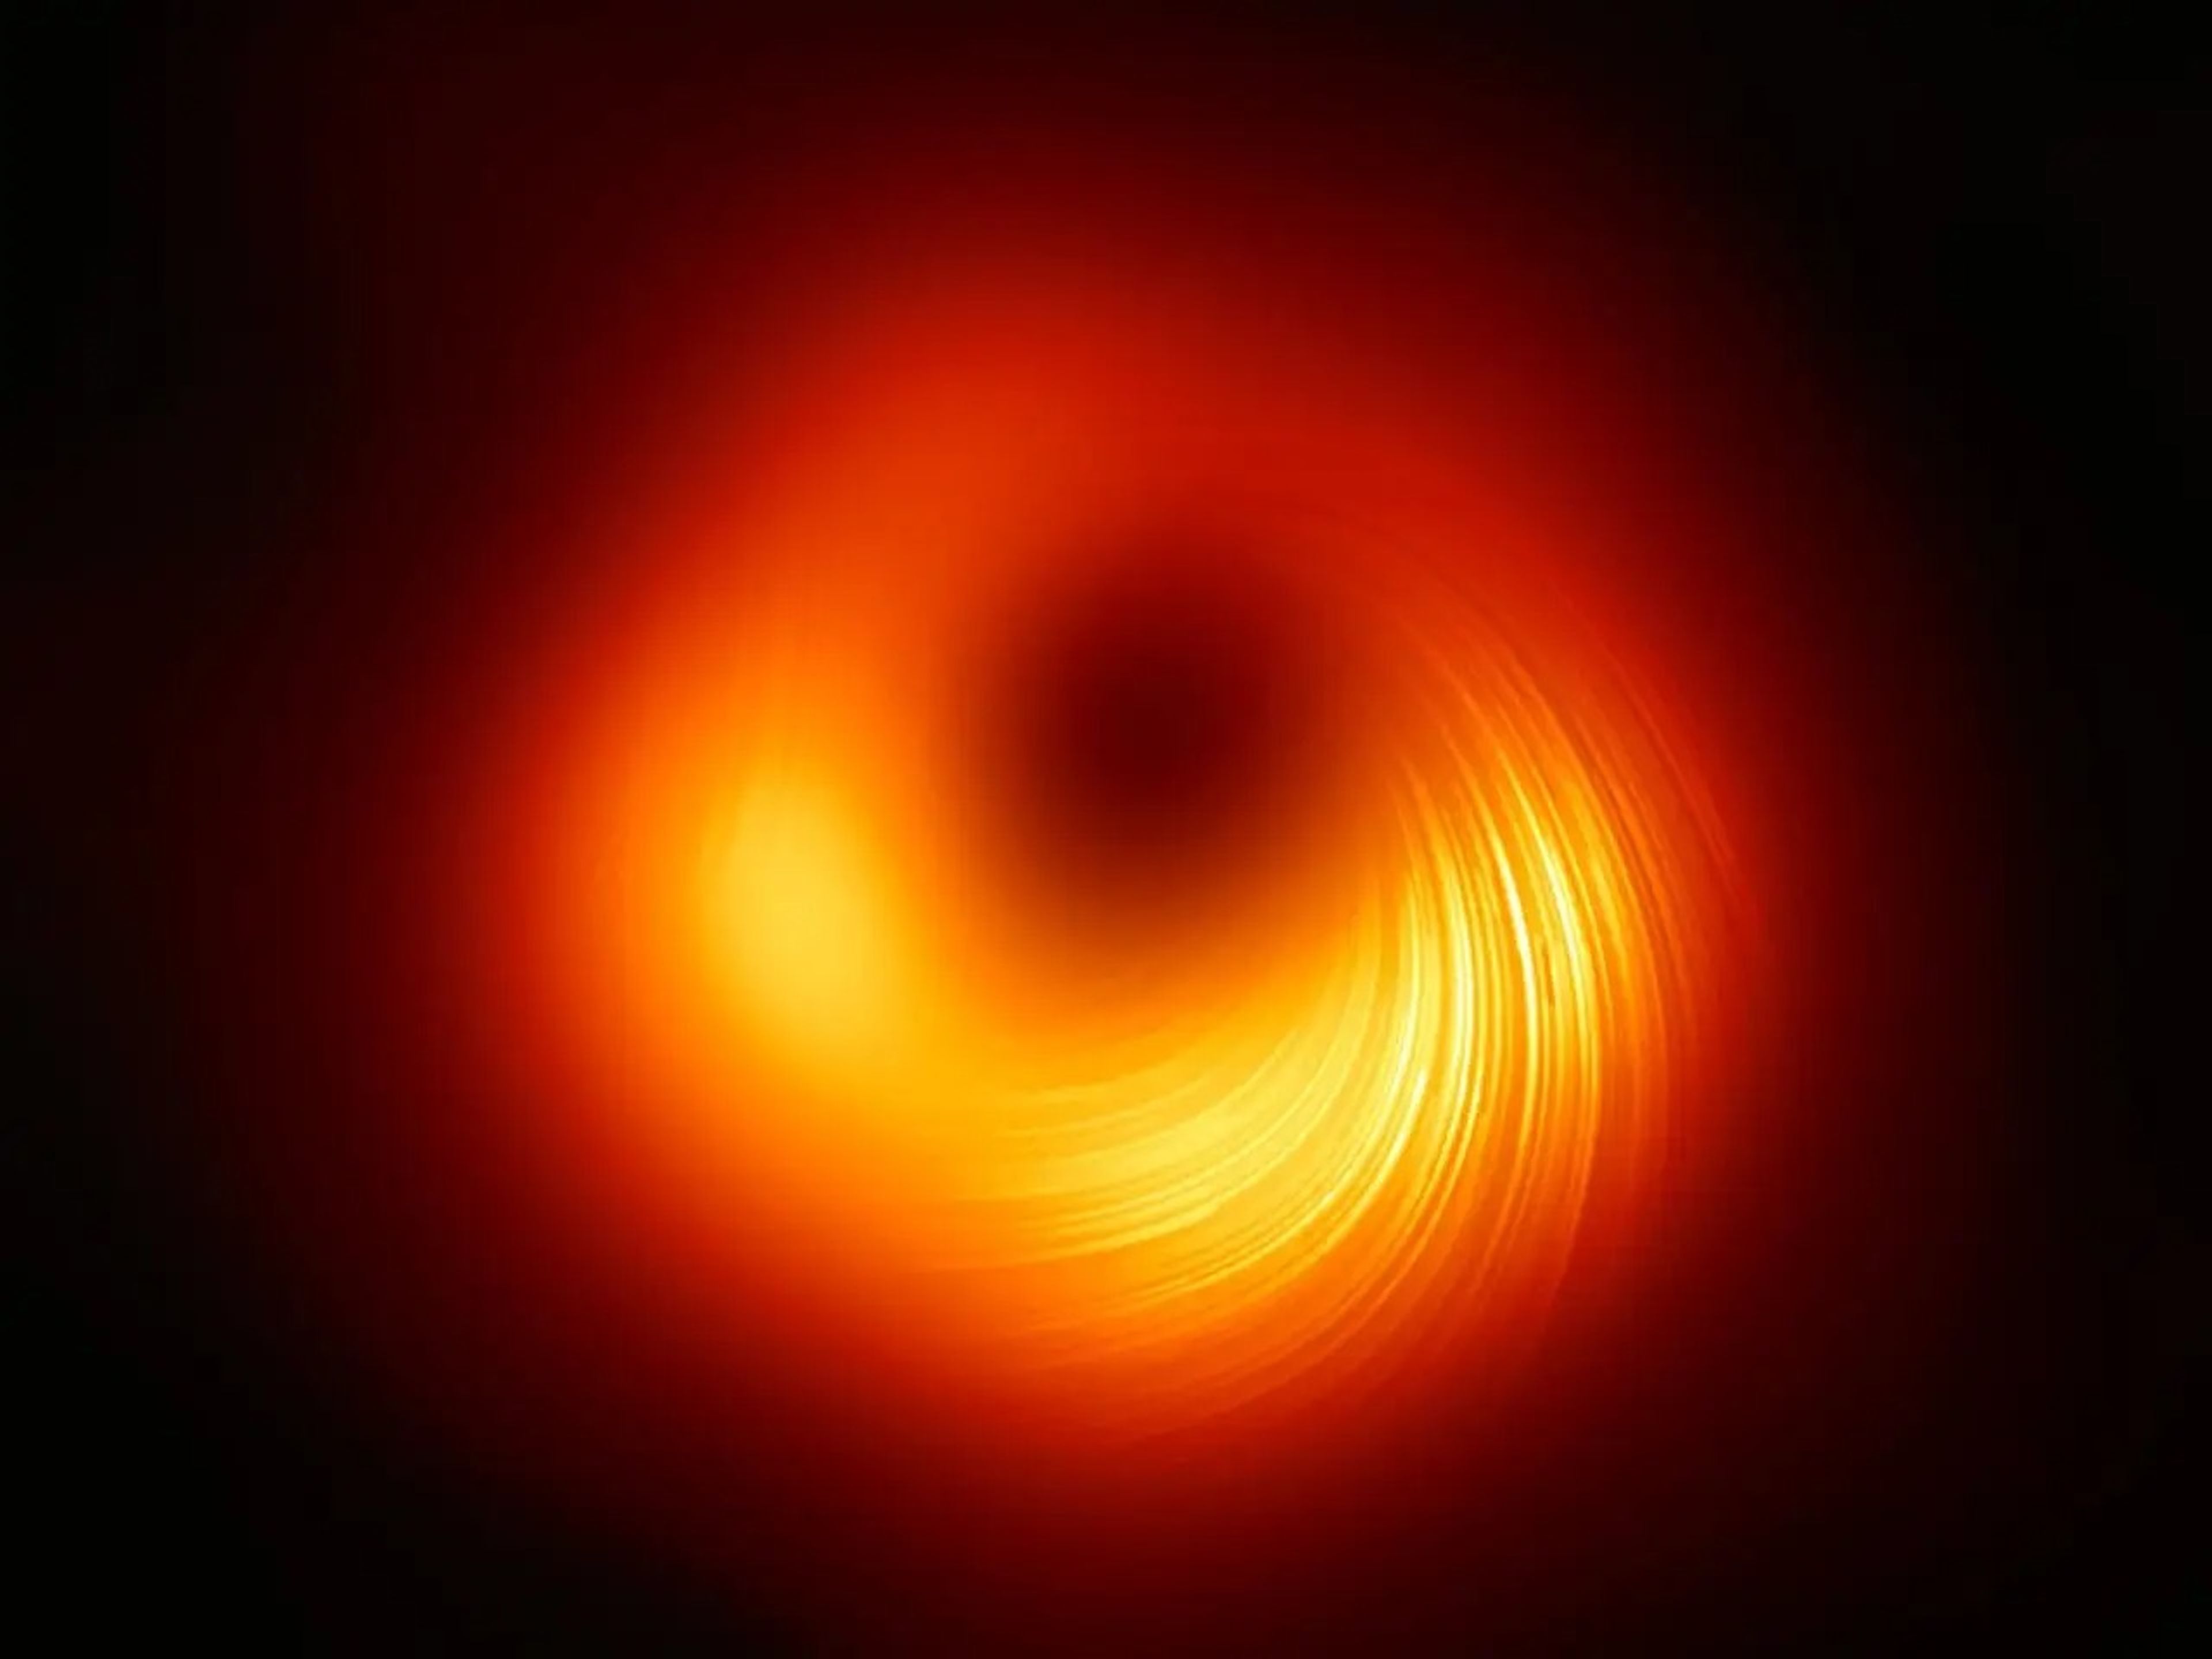 Vista del agujero negro supermasivo M87 bajo luz polarizada.